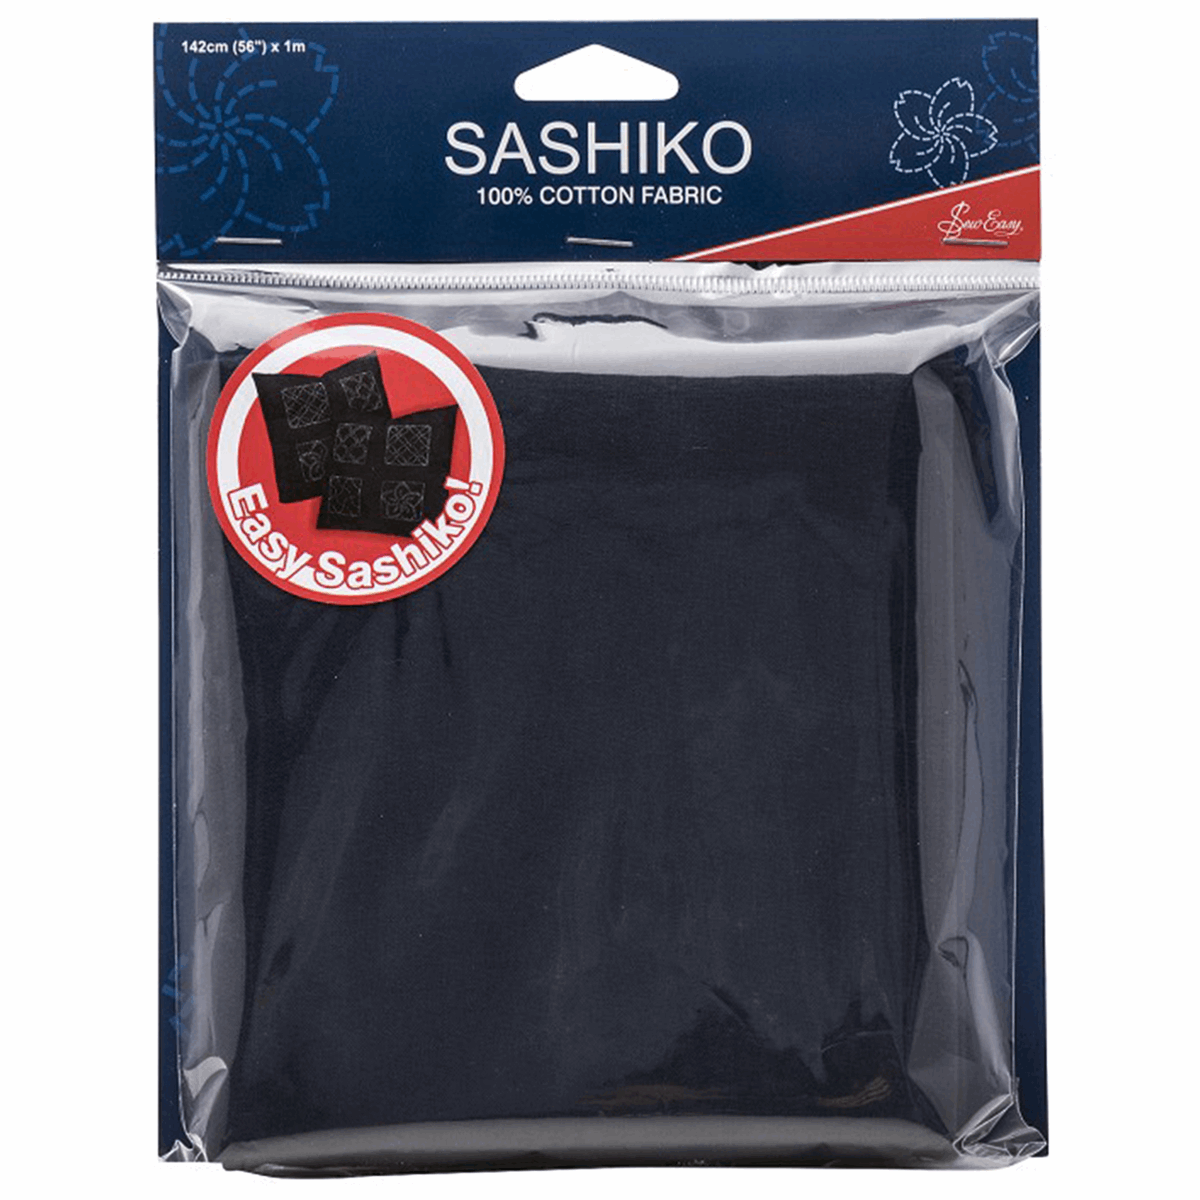 Sew Easy Sashiko Cotton Fabric - Dark Navy 1m x 1.42m